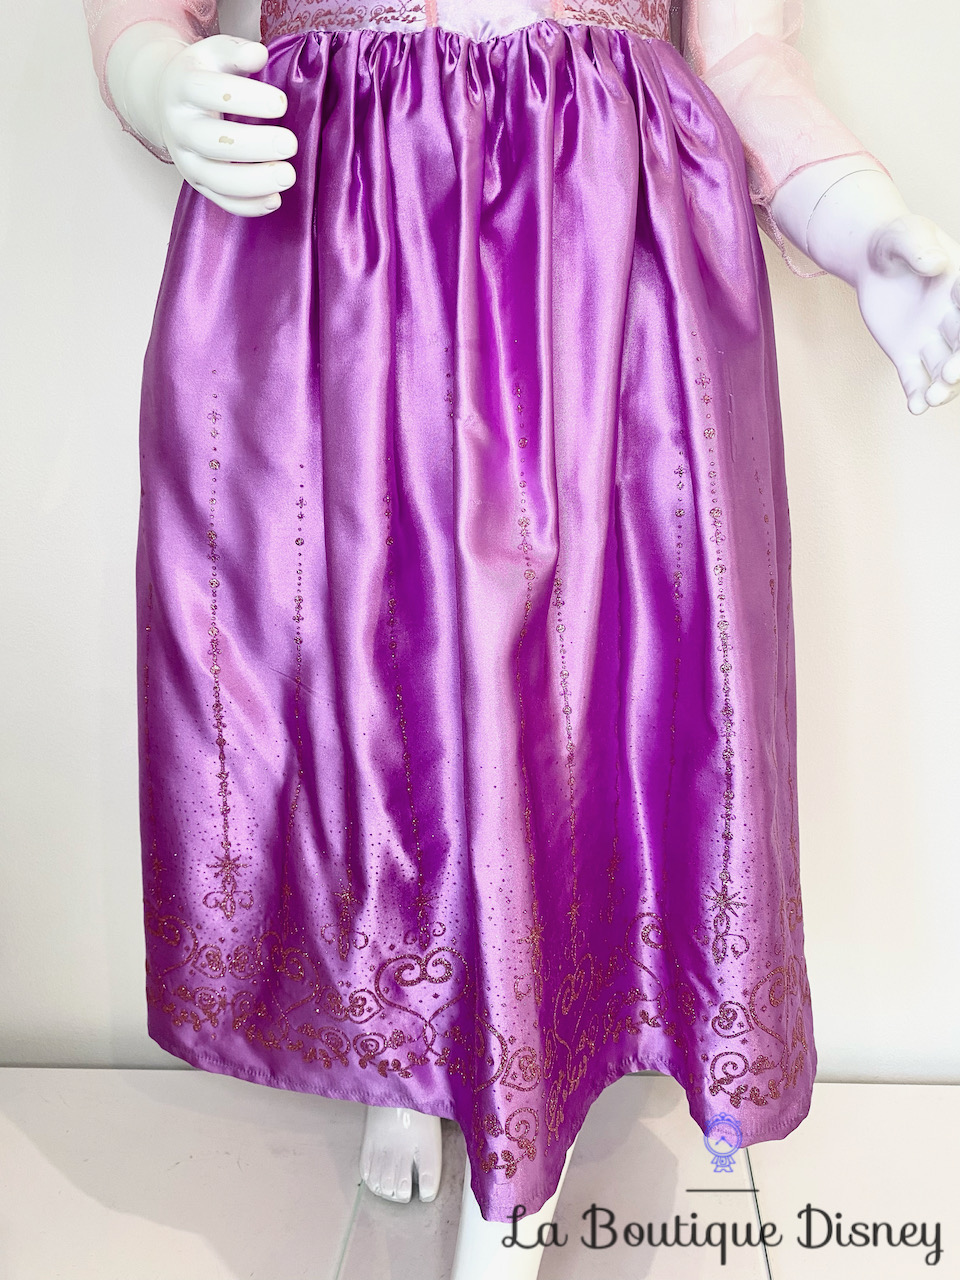 Déguisement robe 'Raiponce' - violet/rose - Kiabi - 23.00€